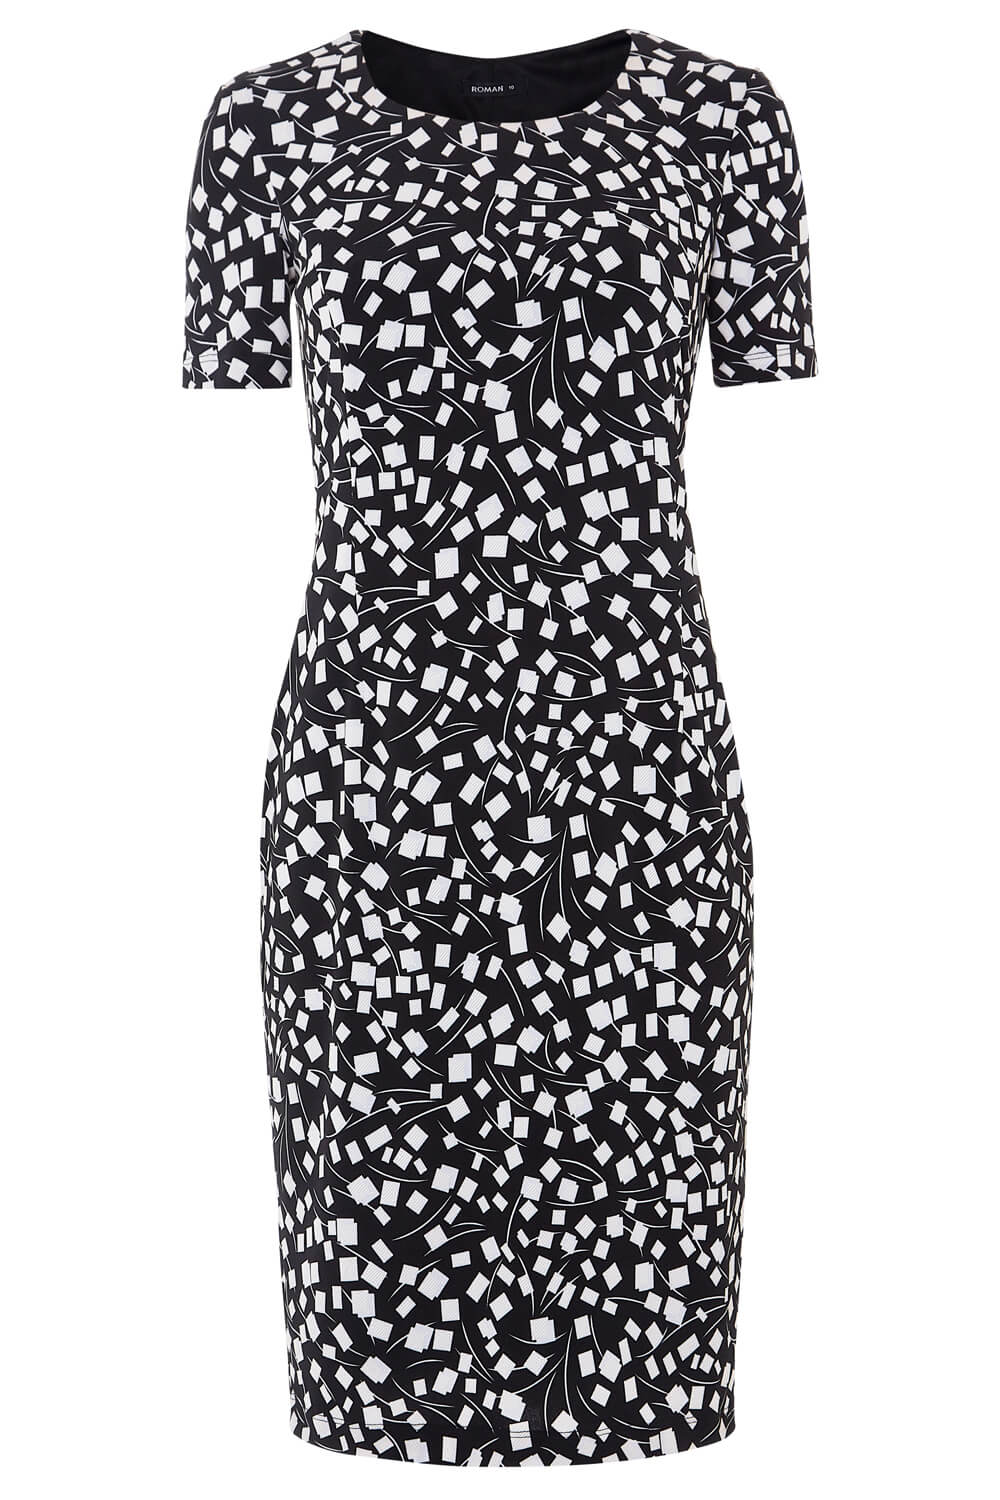 Black Short Sleeve Printed Dress, Image 4 of 4